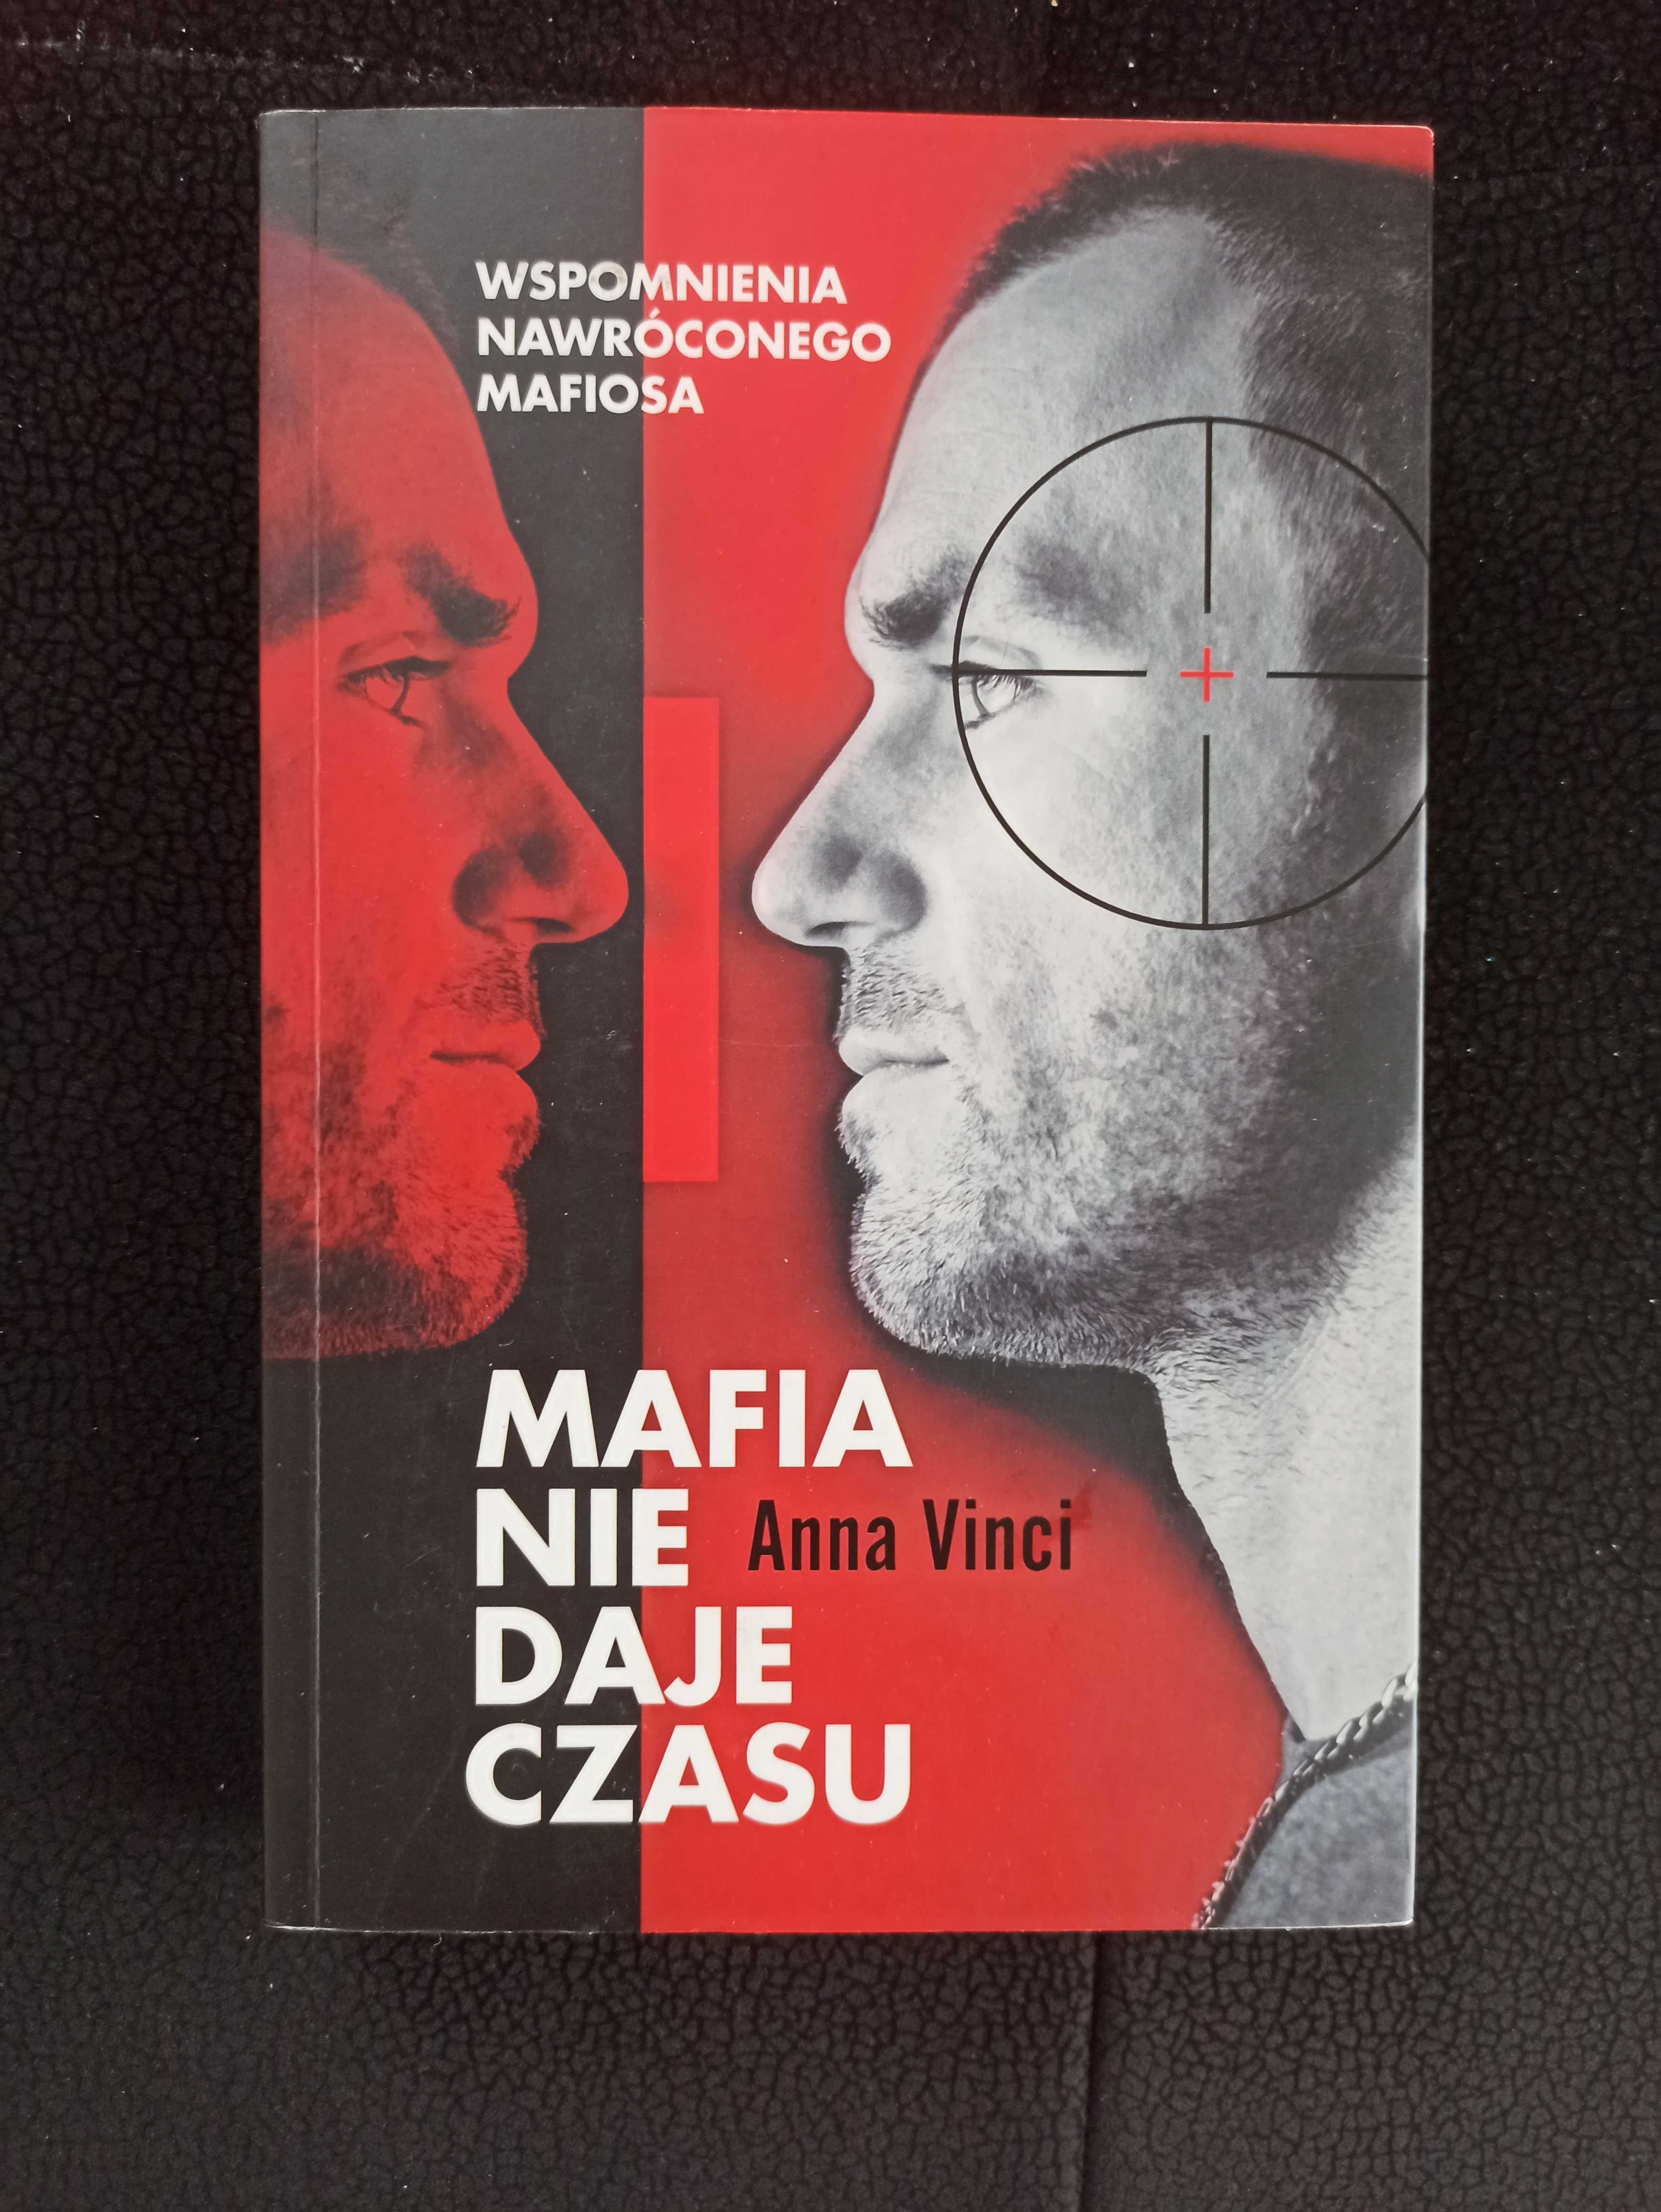 Książka "Mafia nie daje czasu" Anna Vinci